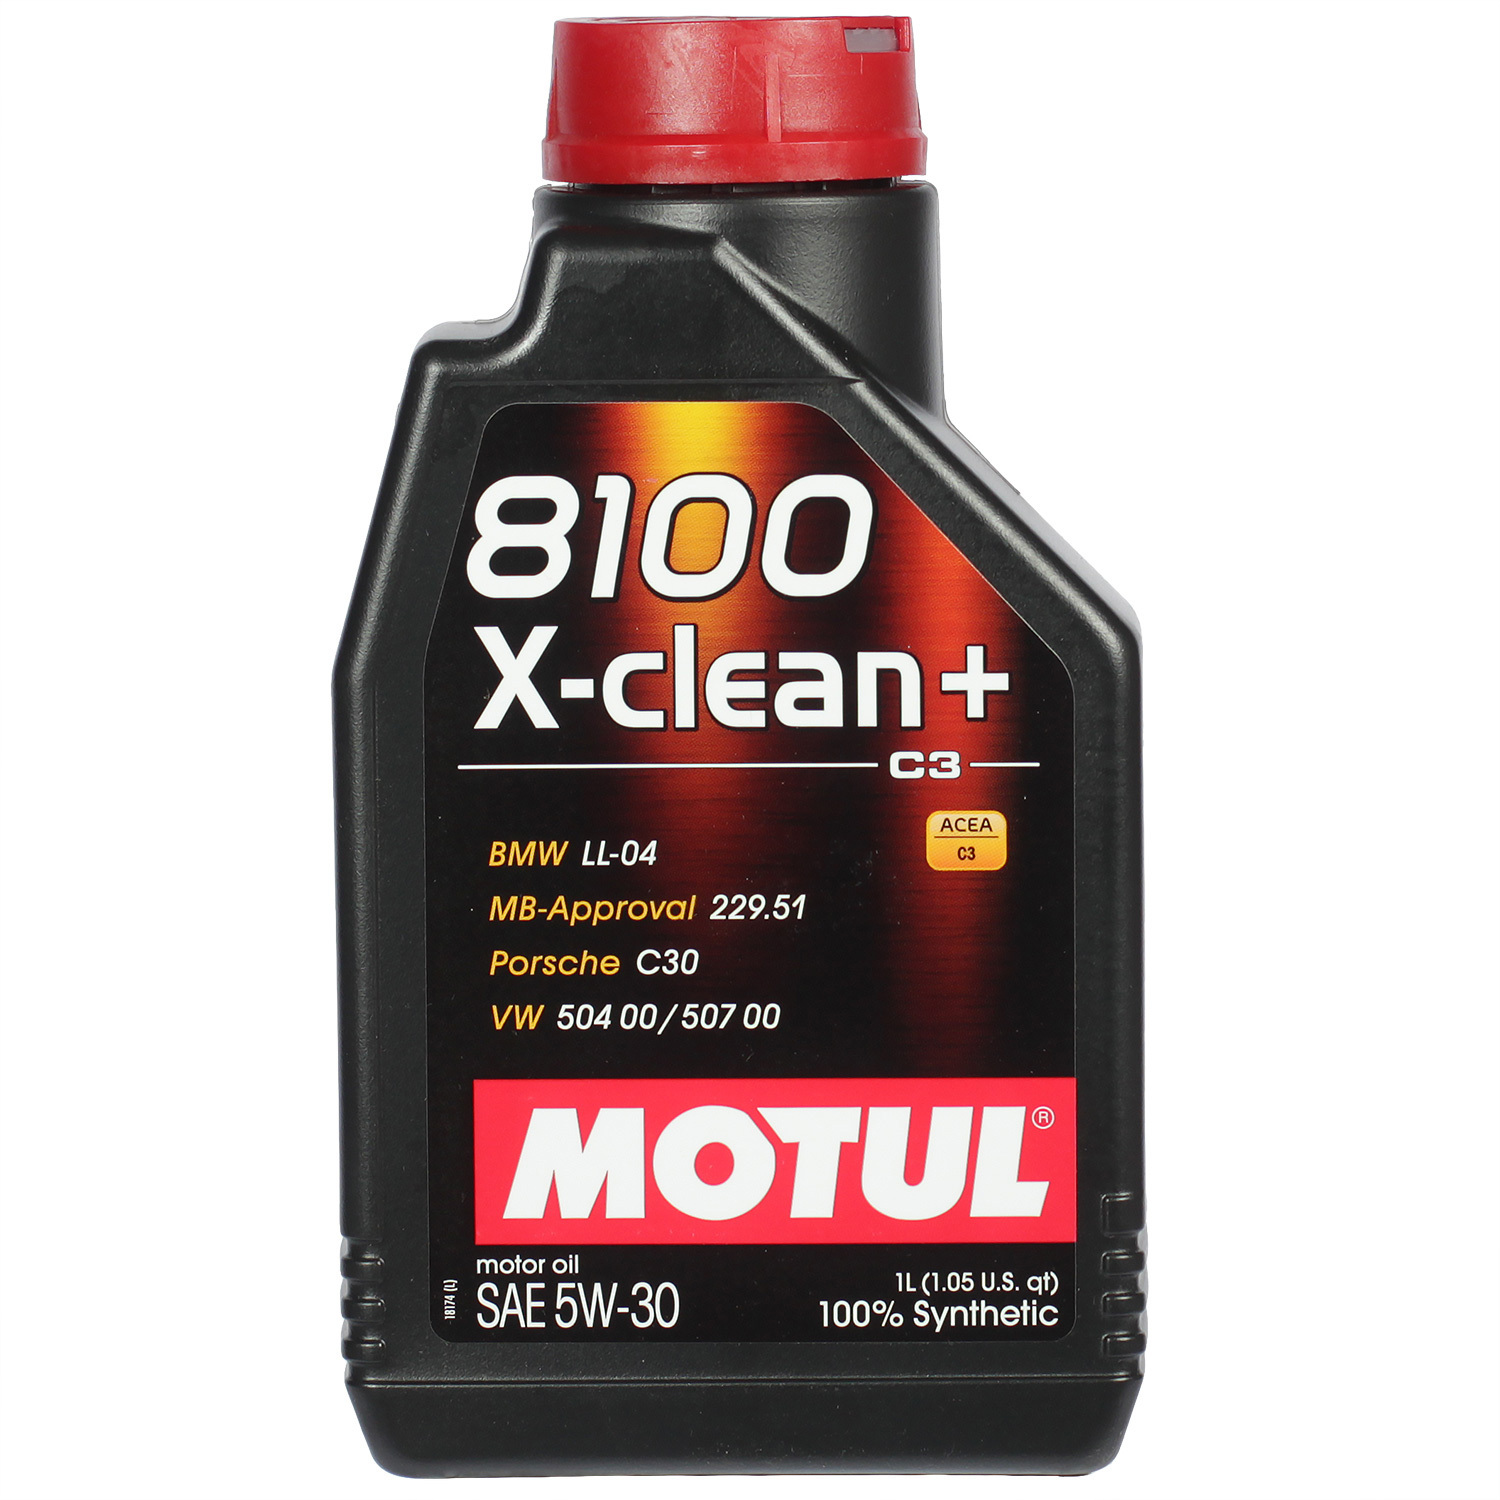 Motul Моторное масло Motul 8100 X-clean+ 5W-30, 1 л motul моторное масло motul 8100 x clean gen2 5w 40 5 л